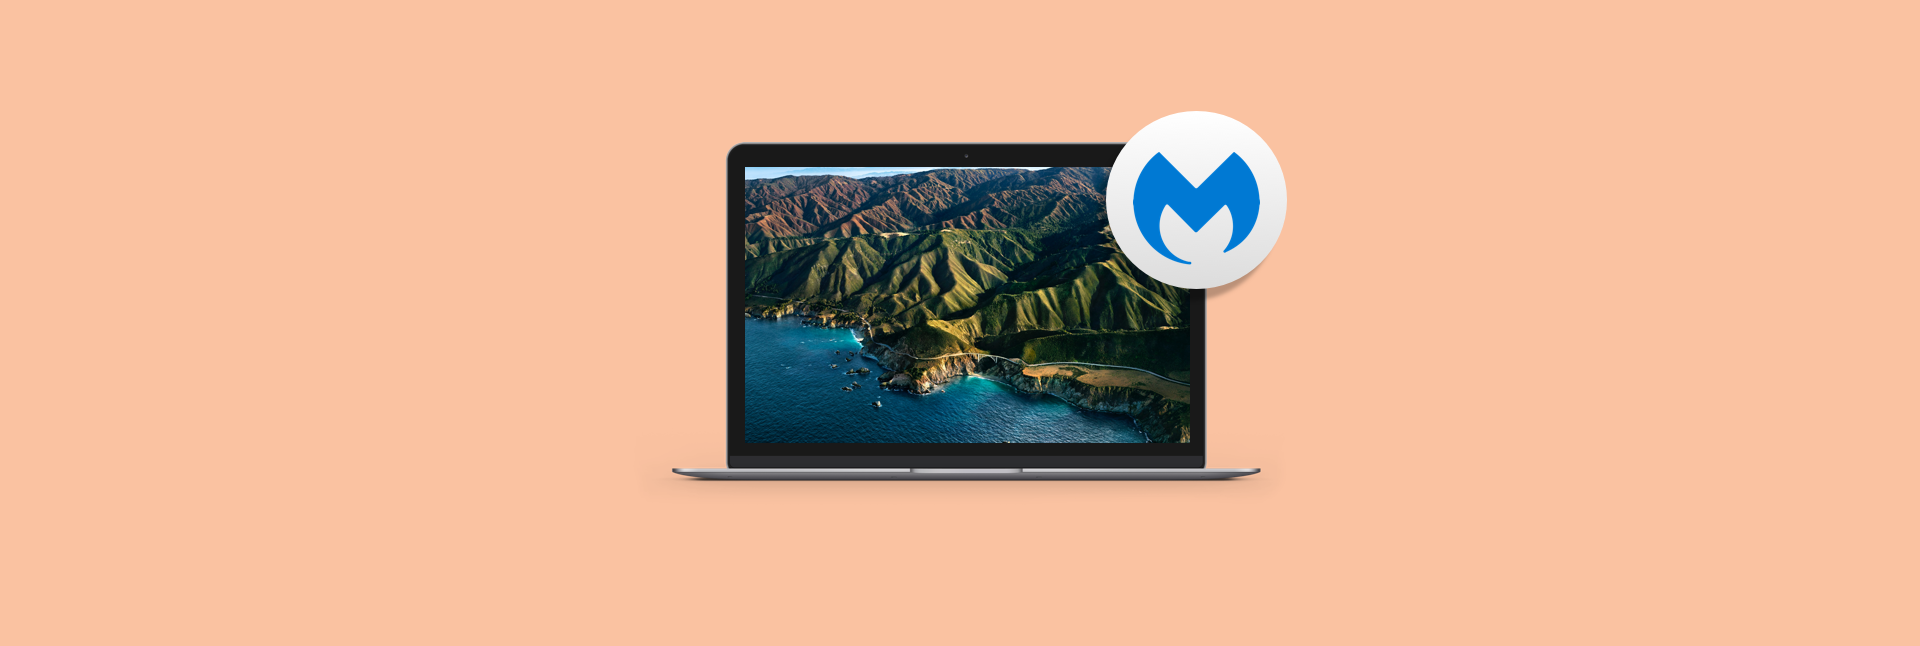 is malwarebytes for mac good?